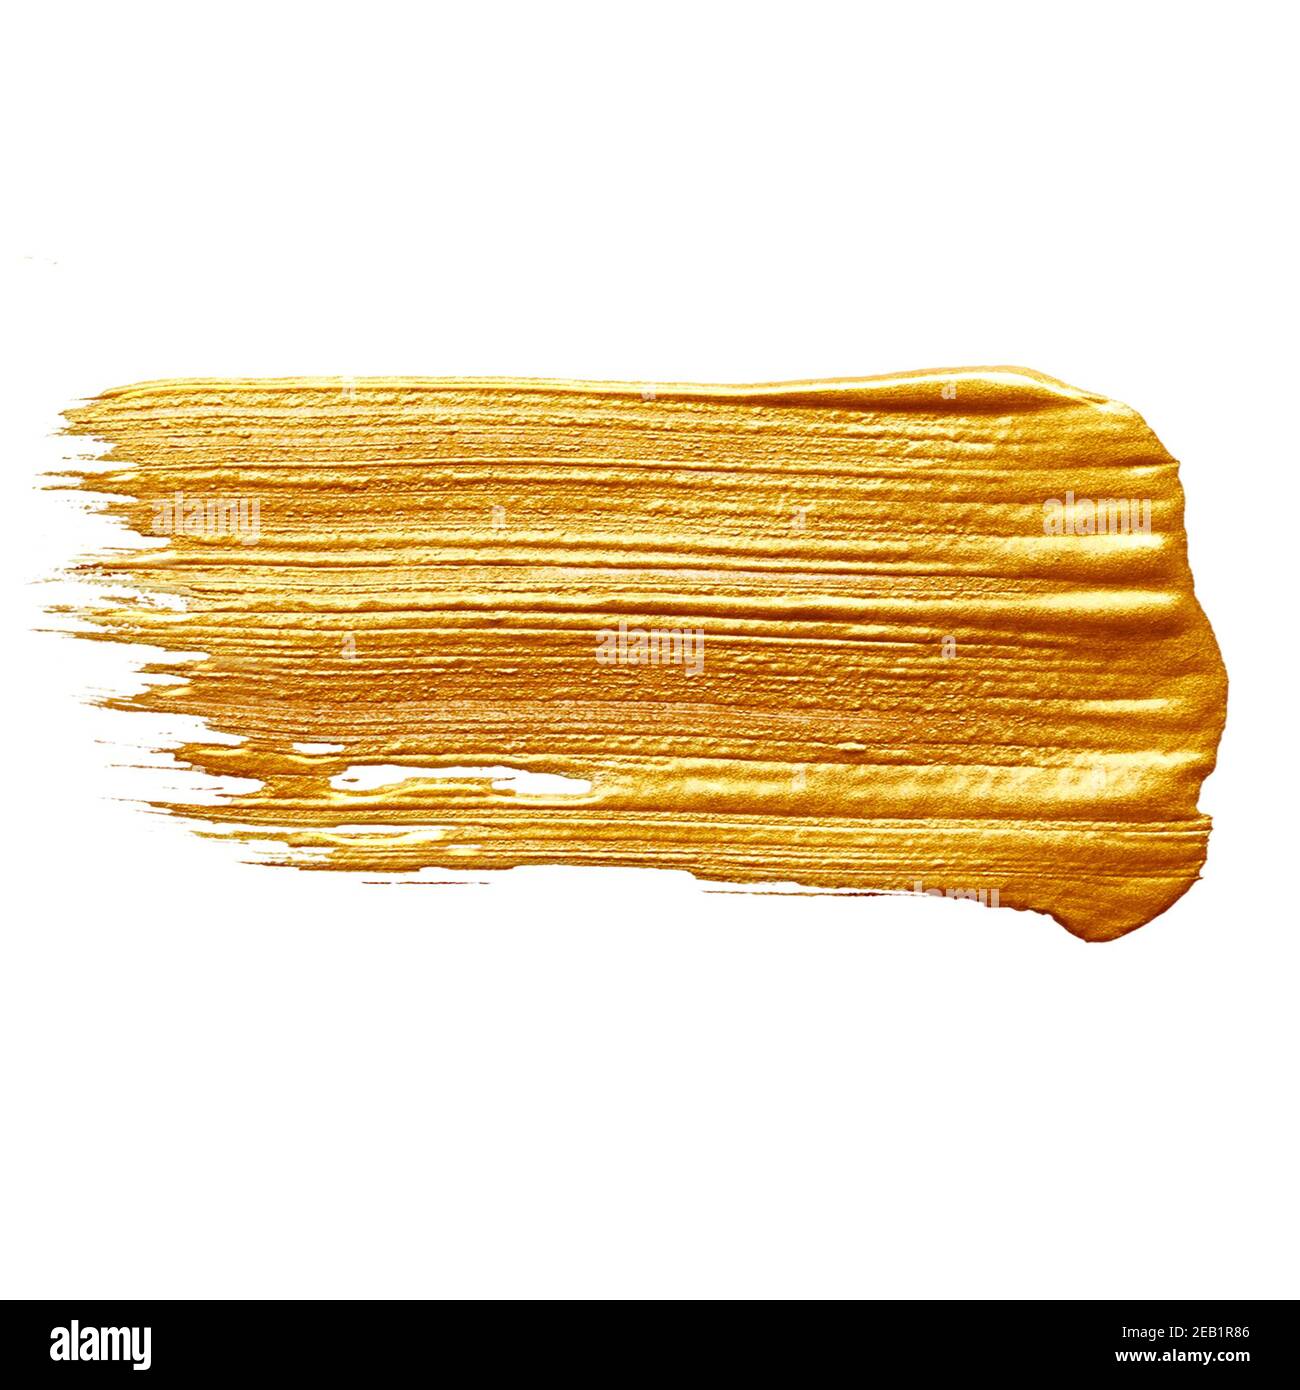 Strokes of golden paint Stock Photo by ©Nik_Merkulov 59114453